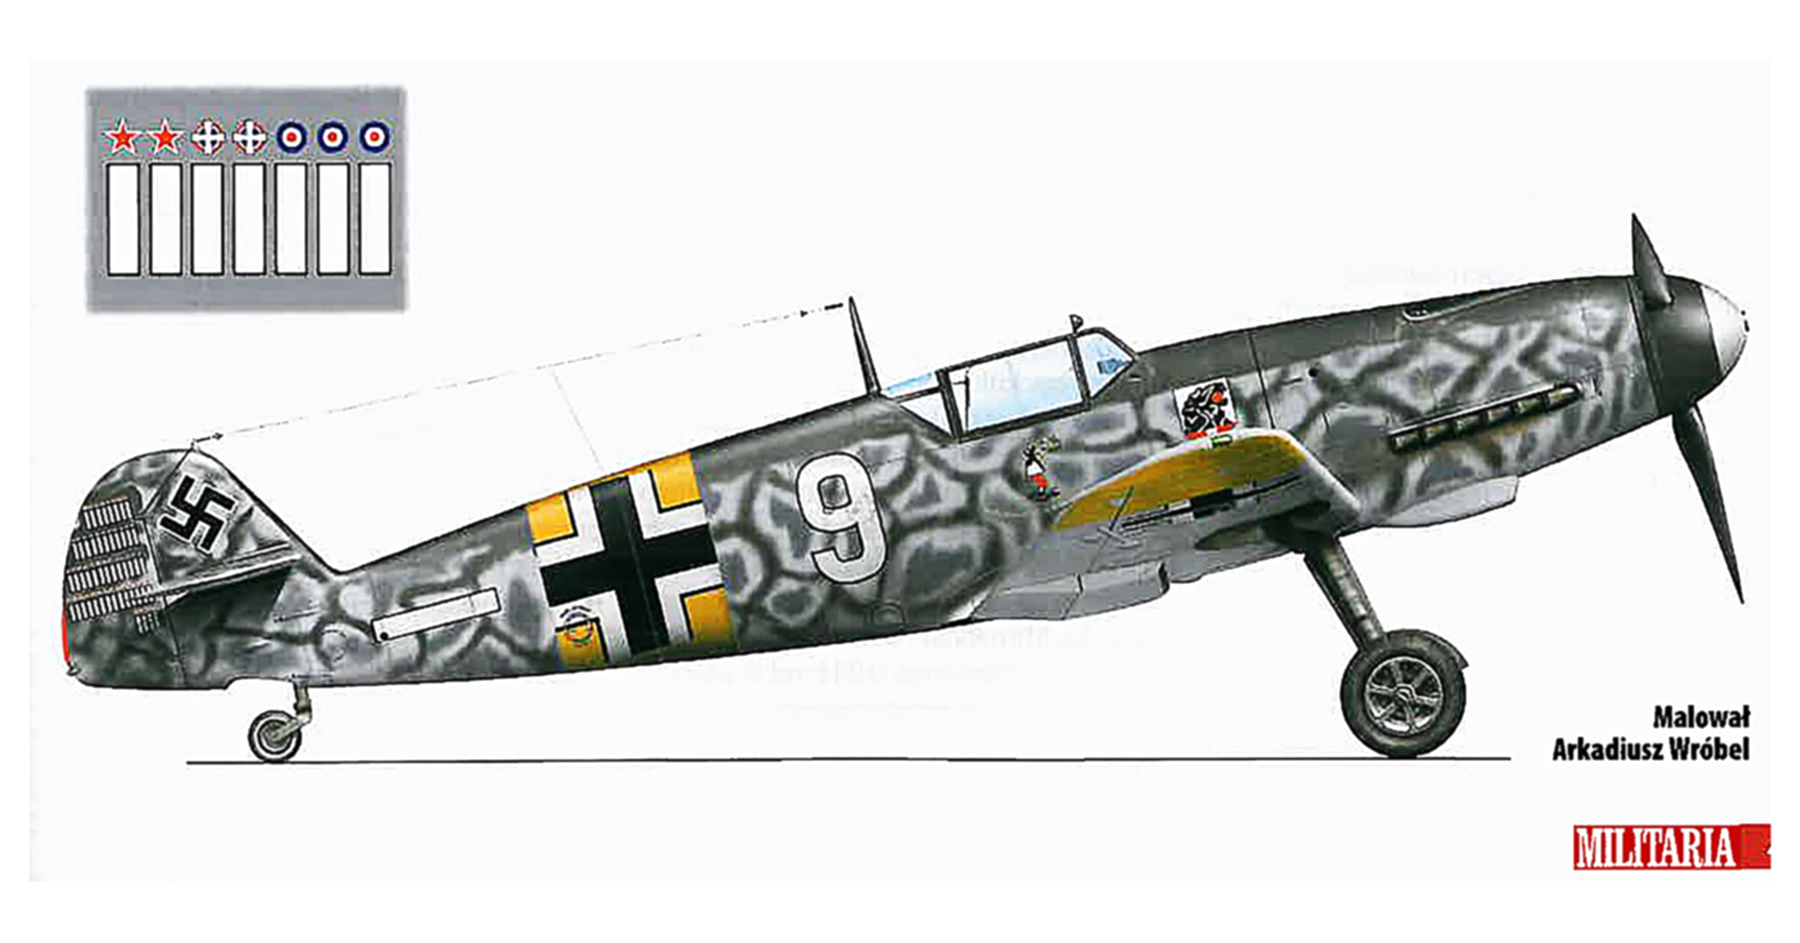 Messerschmitt Bf 109F2 4.JG54 White 9 Hans Fips Philipp Owsischtschi airfield Russia 10th Aug 1941 0C